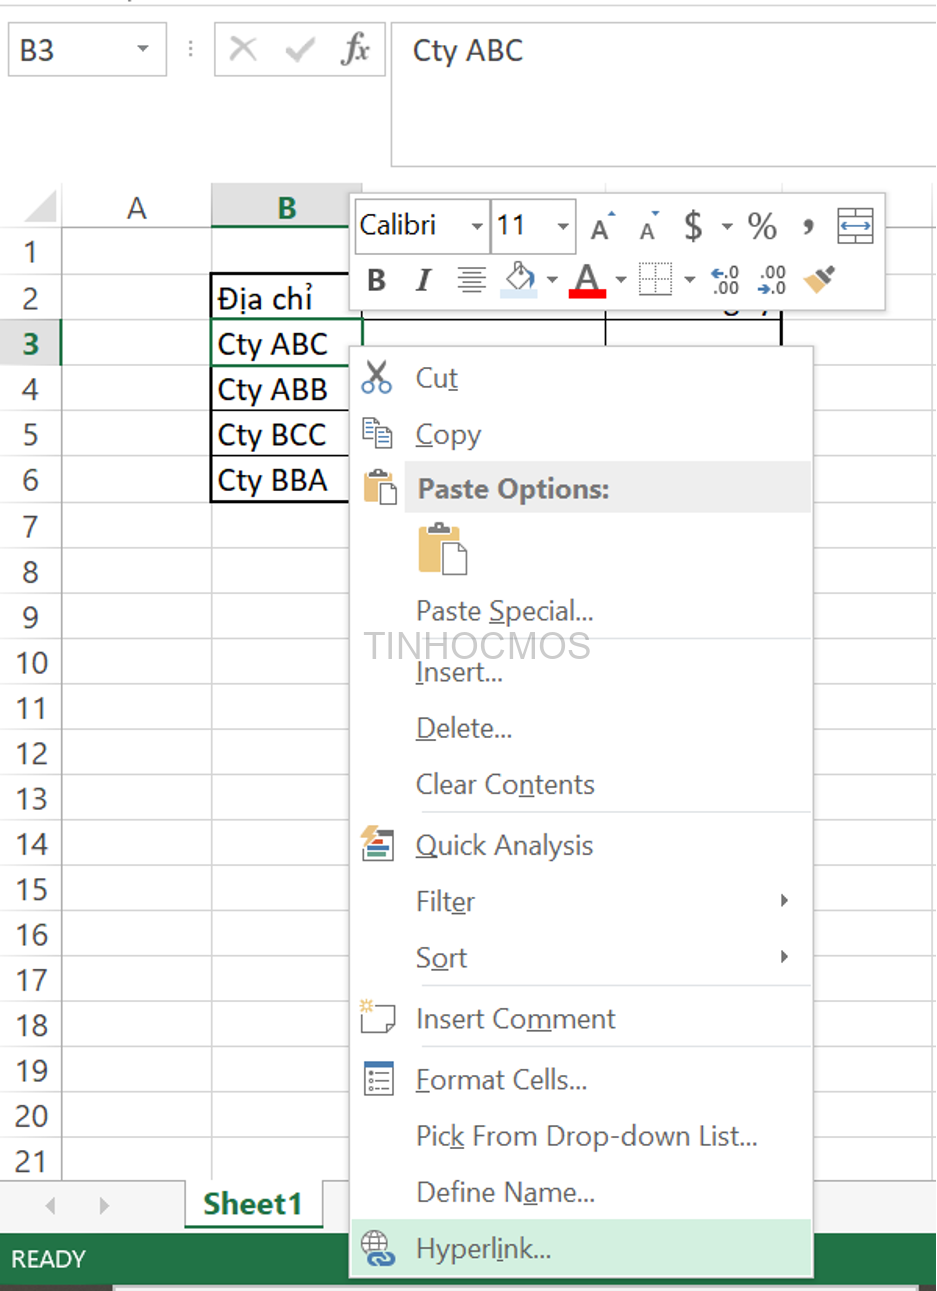 hyperlink trong Excel